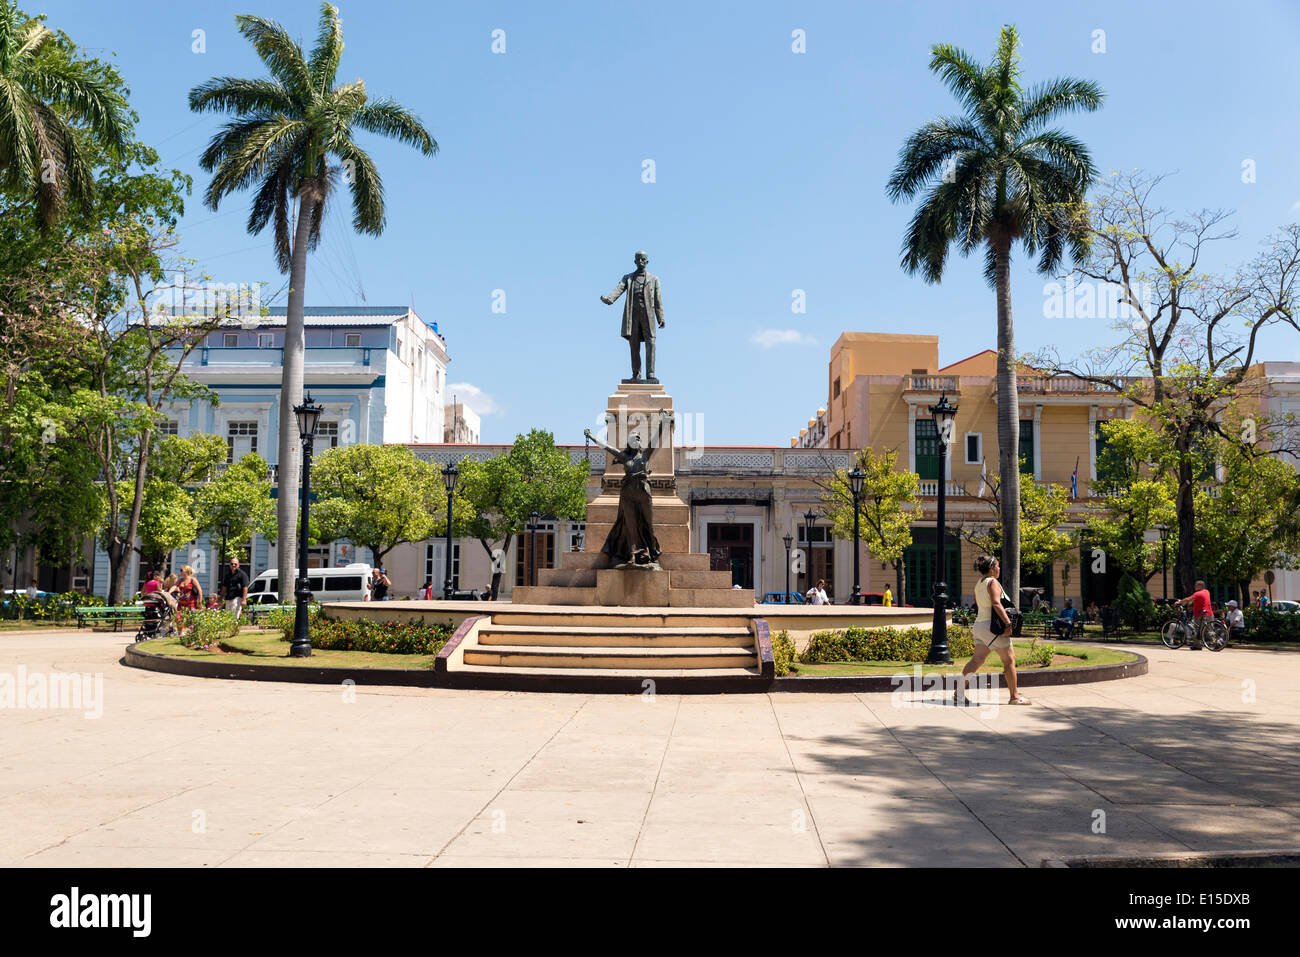 Matanzas, Cuba - main square. Palm trees and statue depicting Jose Marti and Liberty. Stock Photo